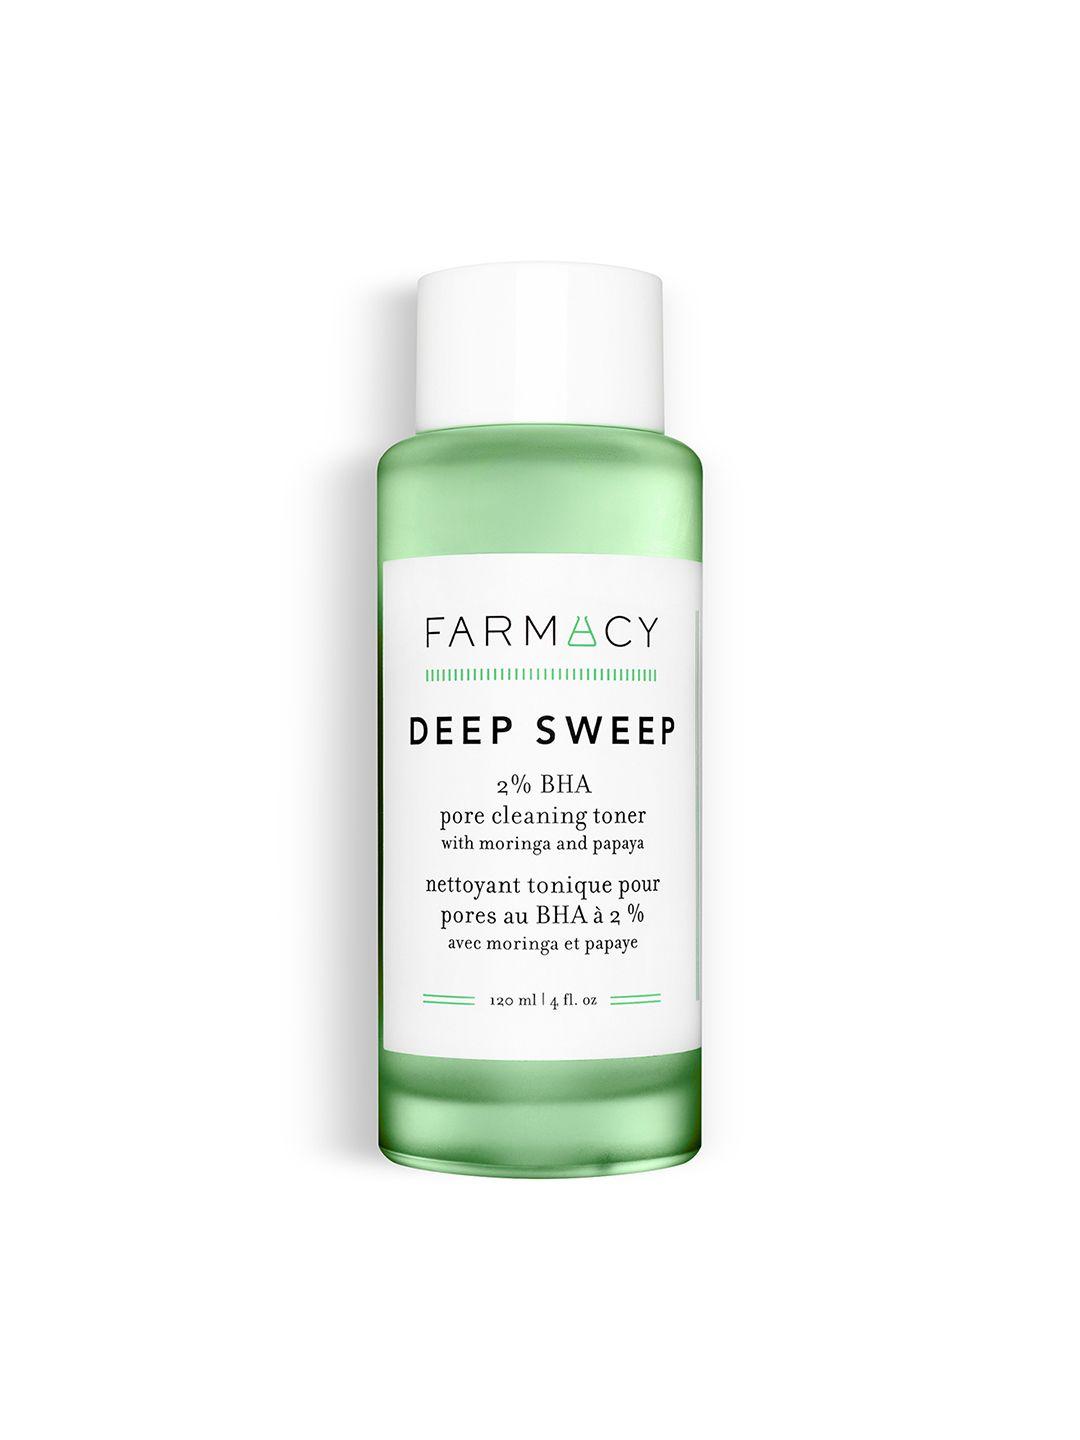 farmacy beauty deep sweep 2% bha pore cleaning toner with moringa - 120 ml